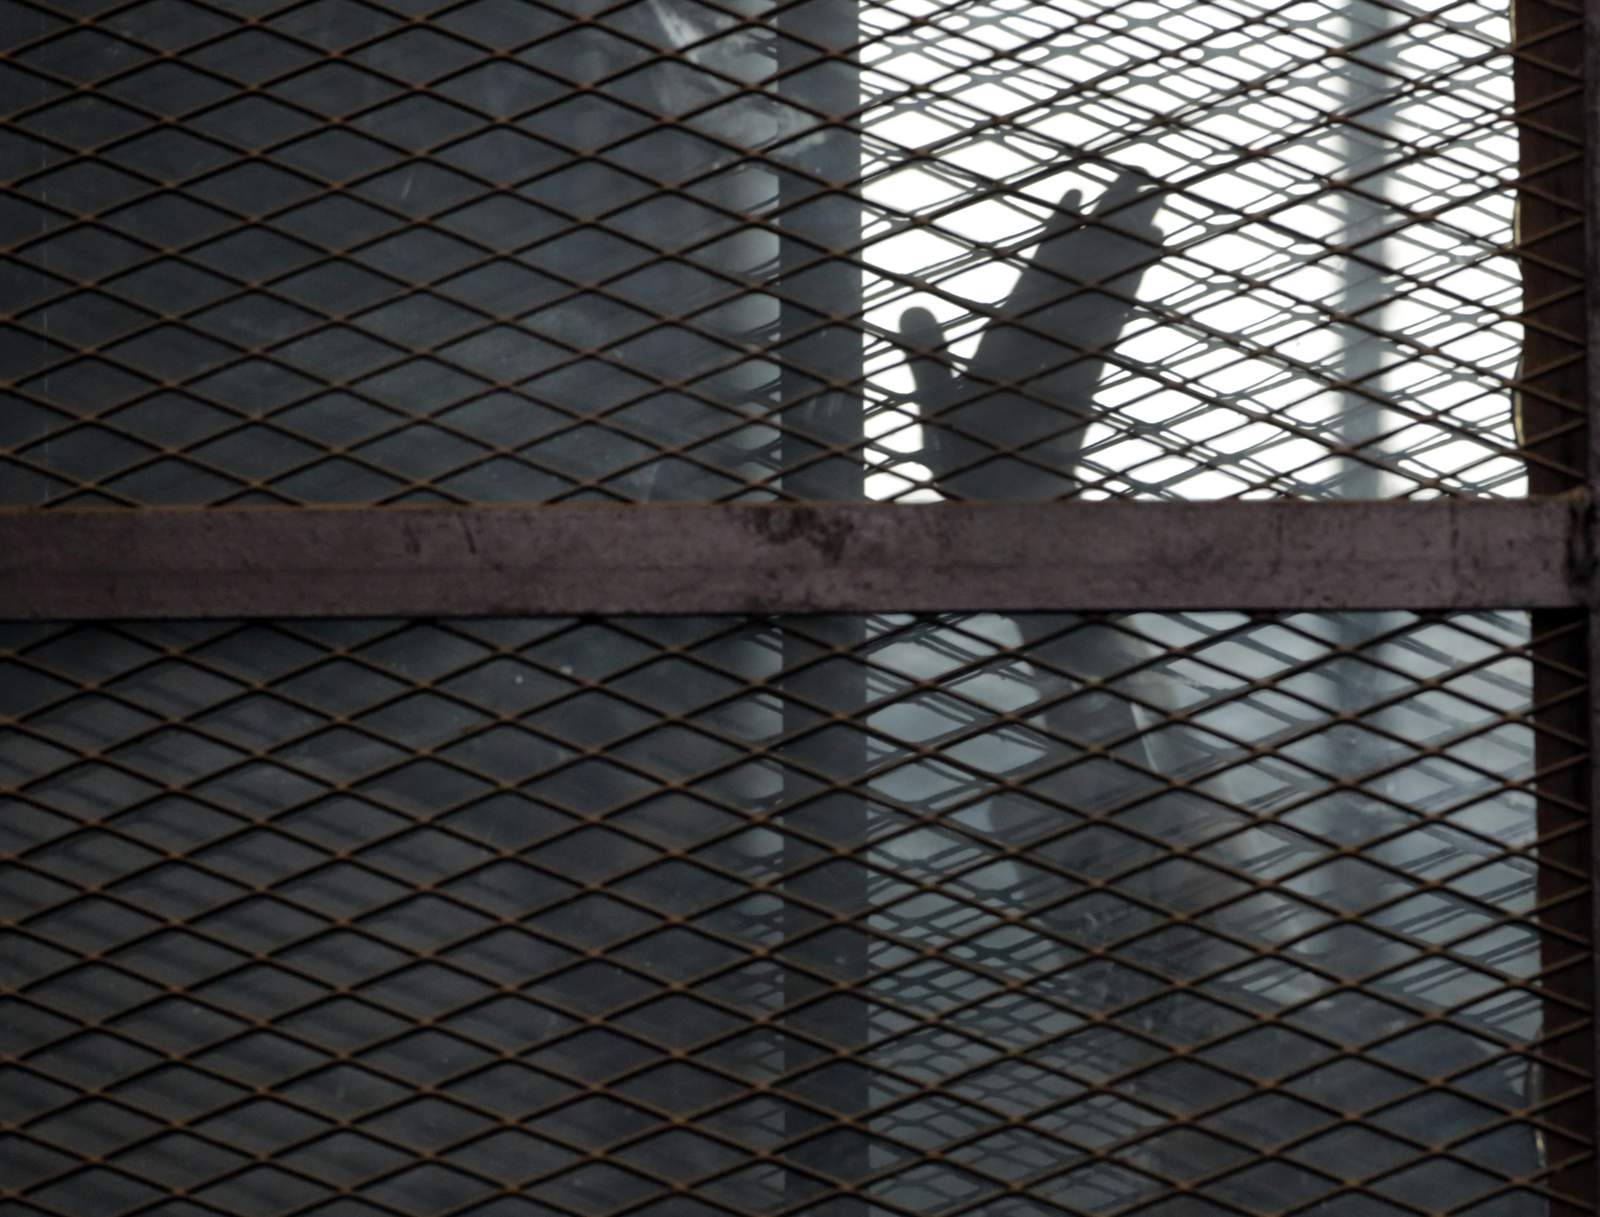 Watchdog: Virus stalks Egypt's prisons amid news blackout